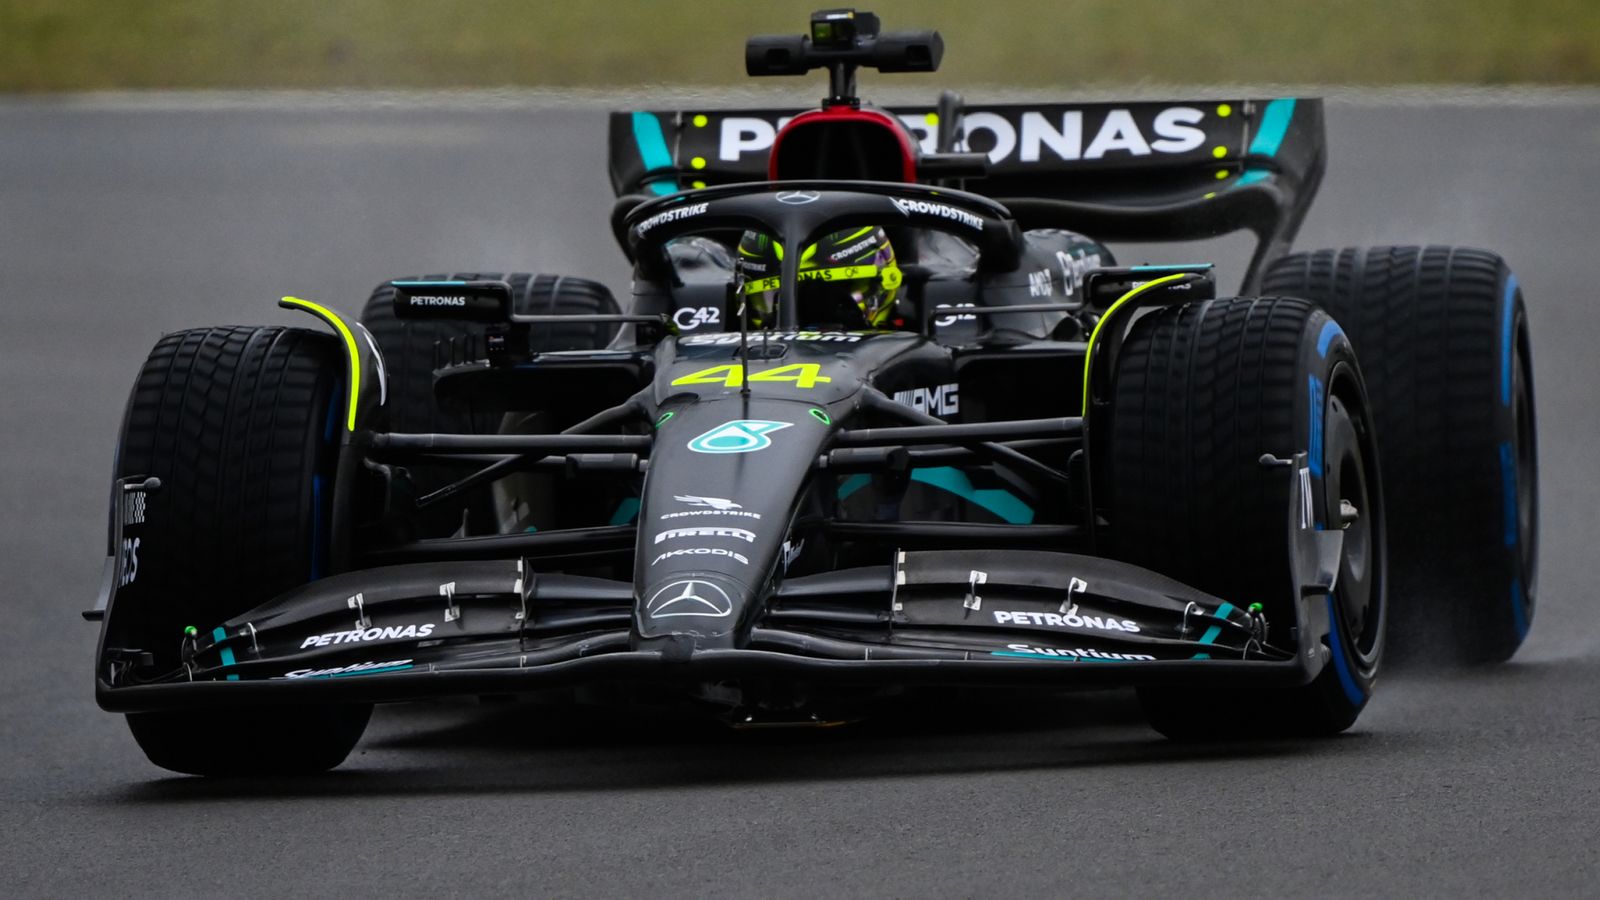 Mercedes-AMG PETRONAS F1 Team on X: 